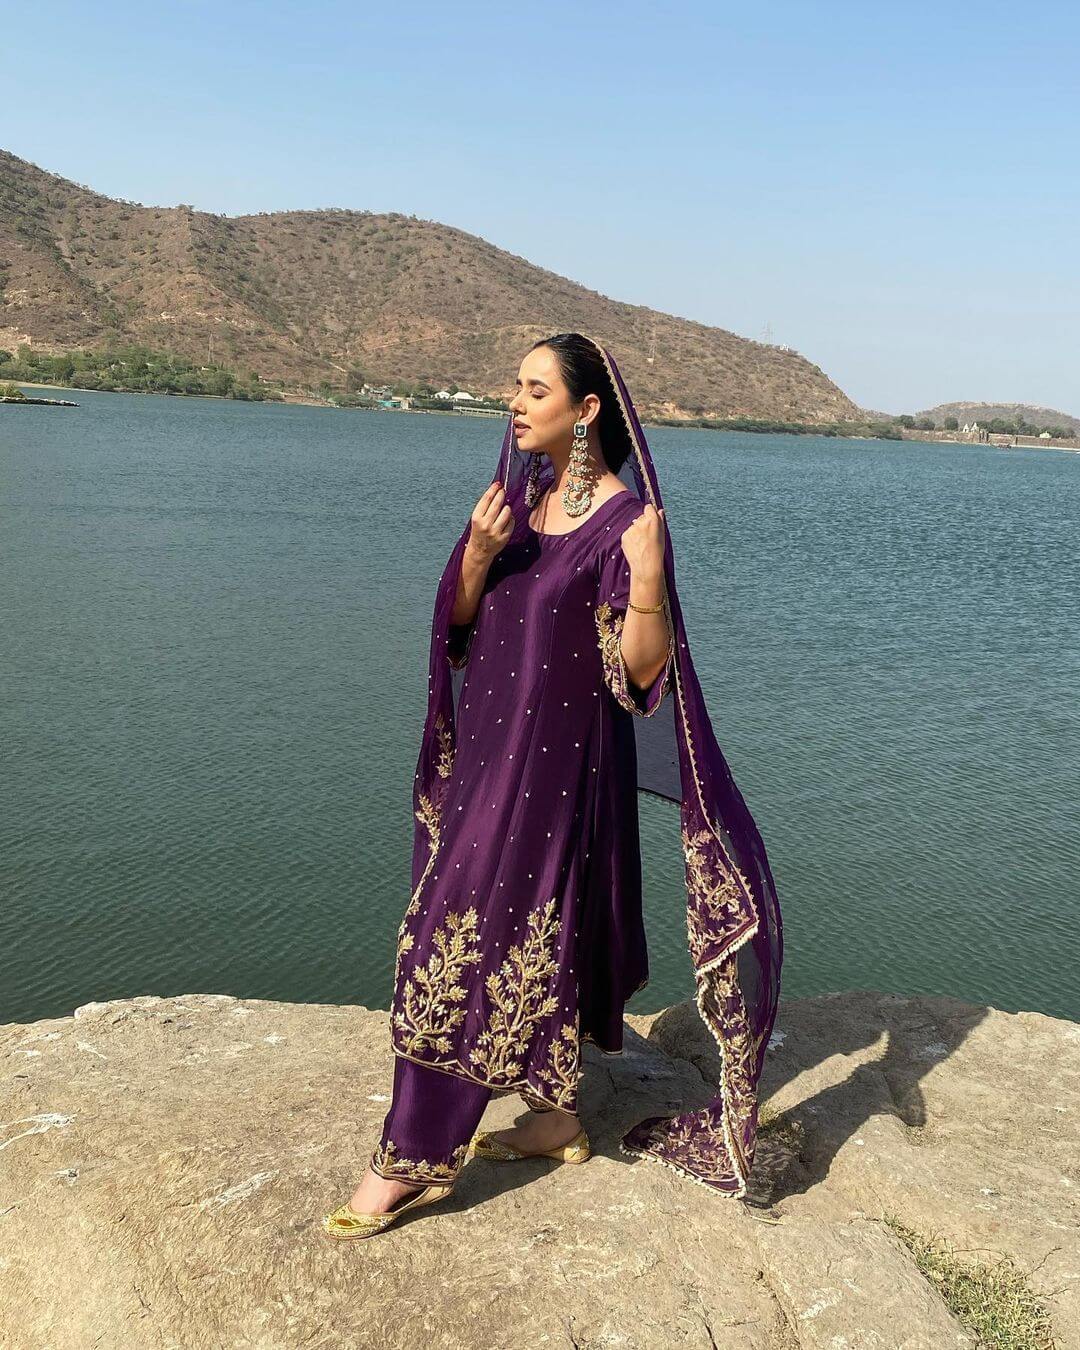 Sunanda Look Pretty In Purple A-Line Kurta Outfit Sunanda Sharma Looks And Outfit